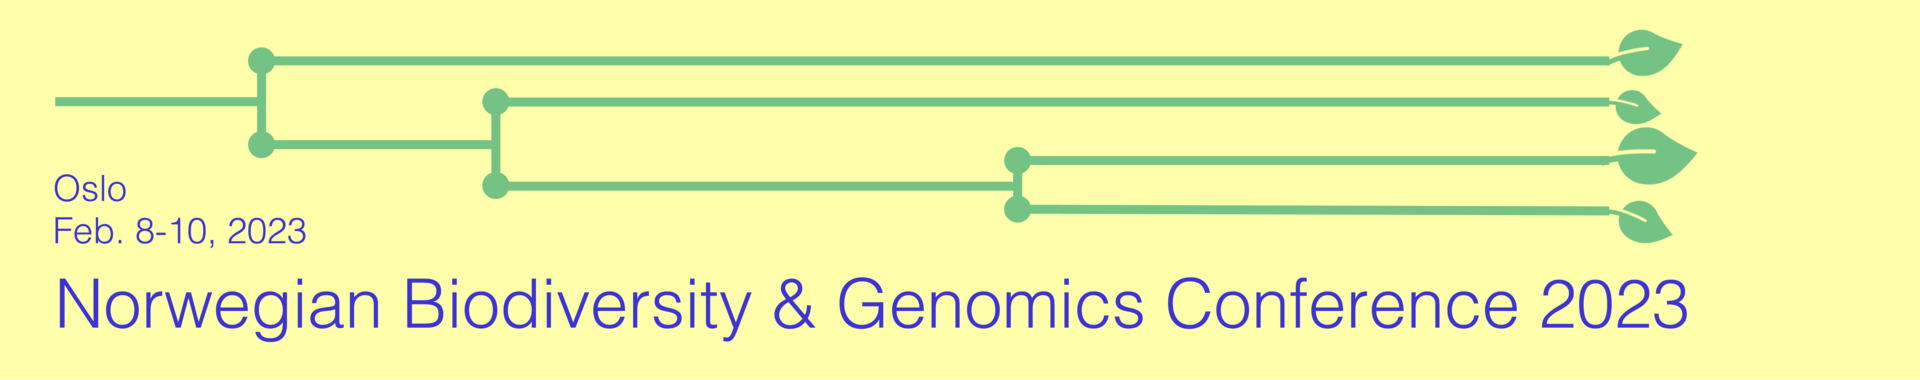 Logo for the Norwegian Biodiversity & Genomics Conference.